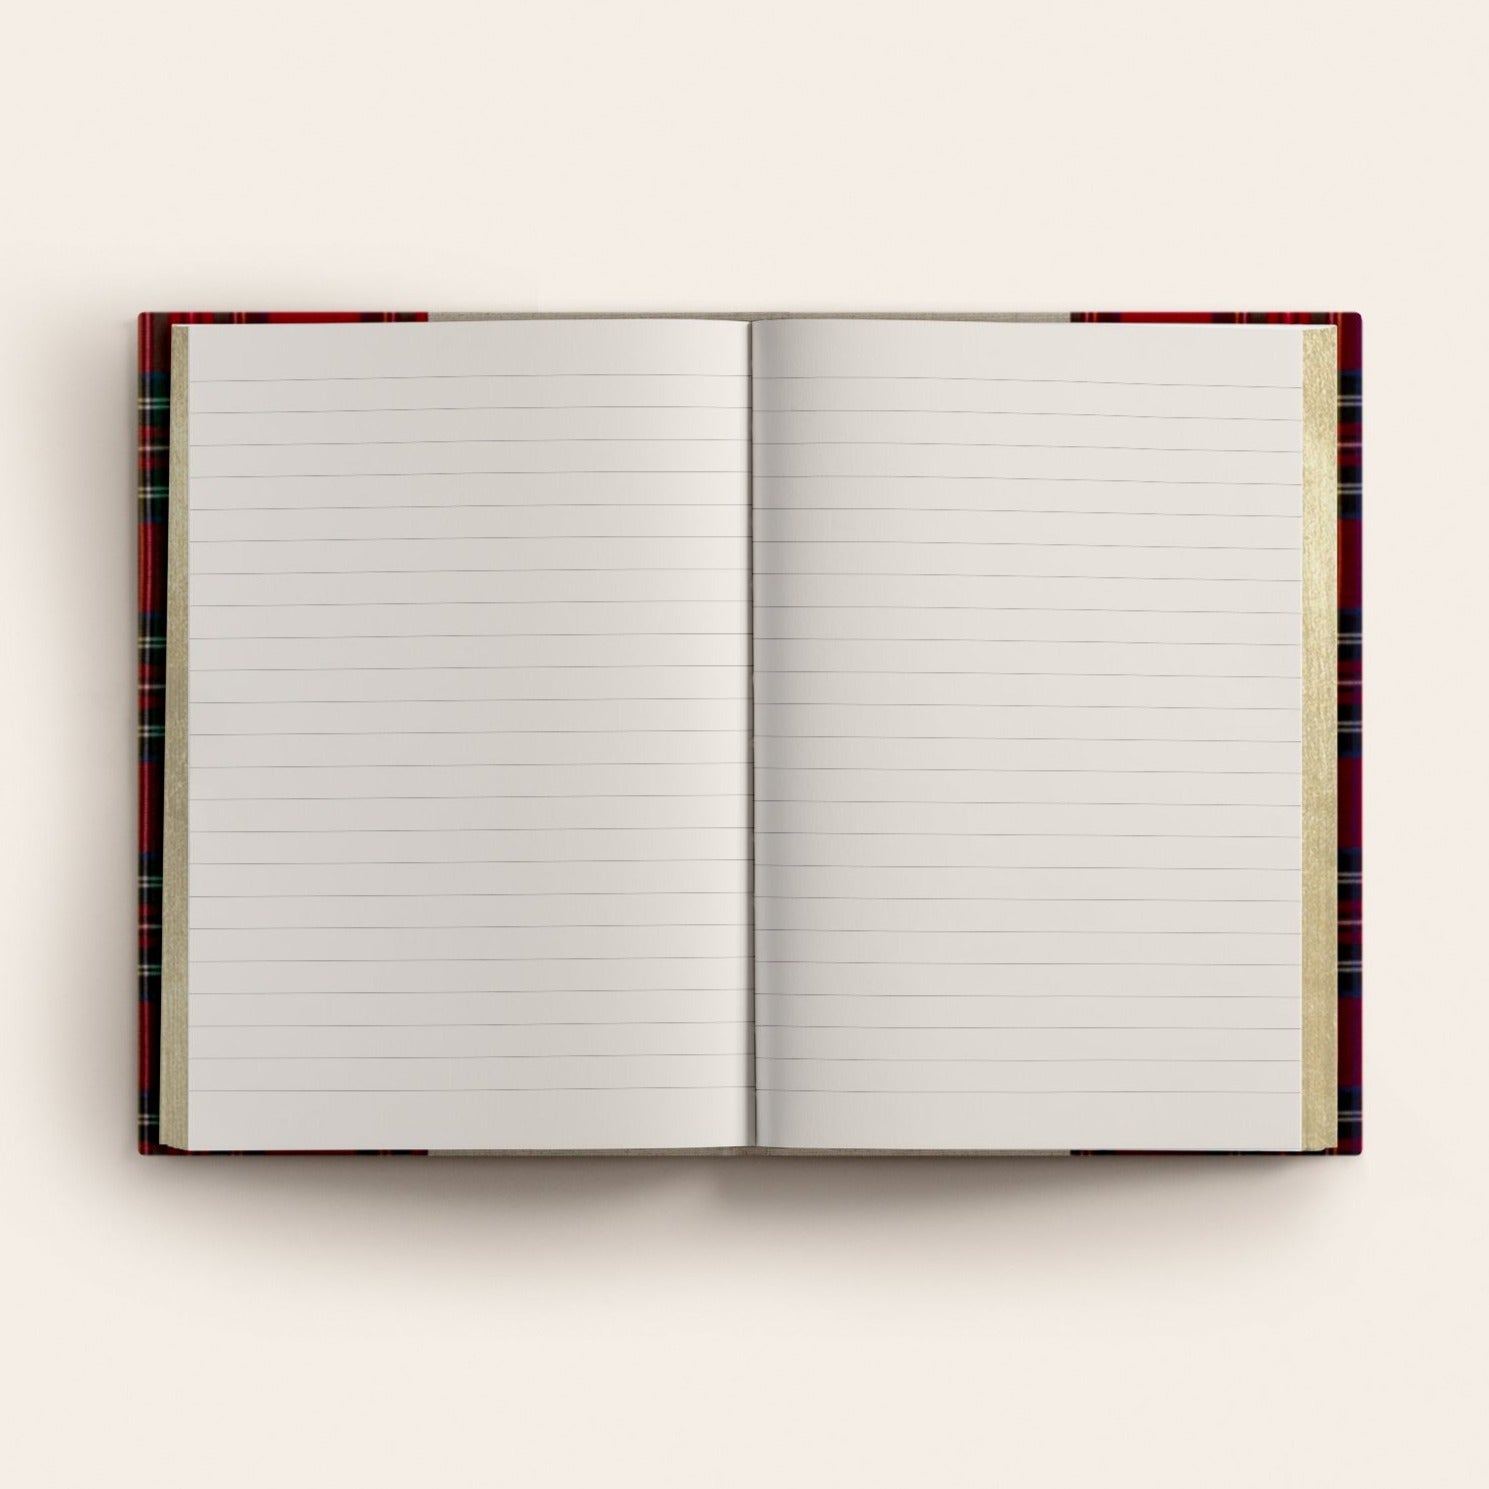 Stirling notebook